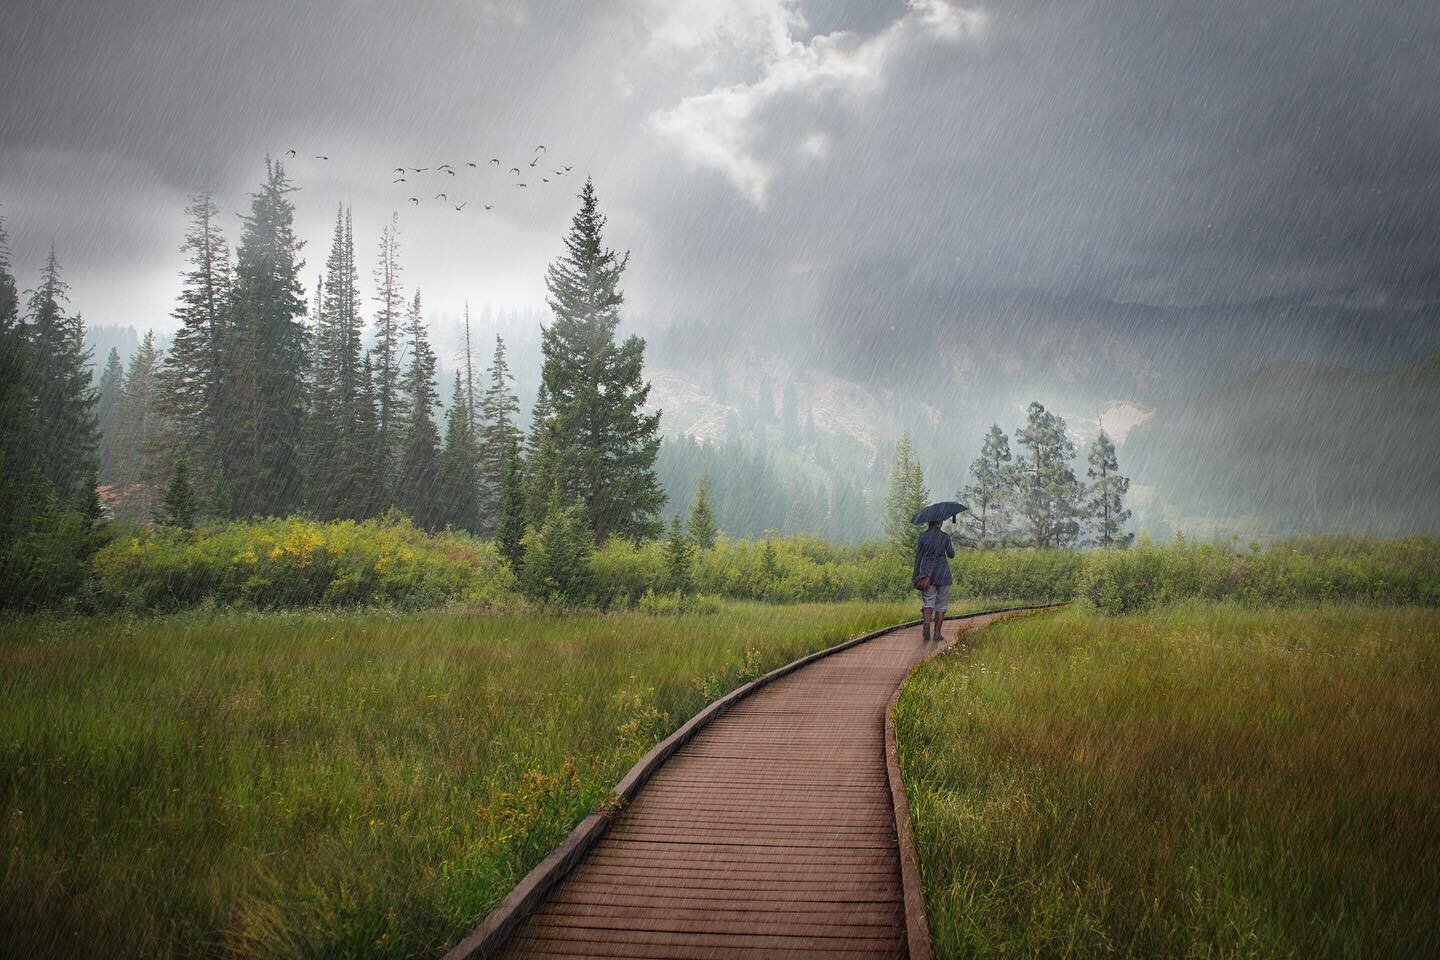 Have You Ever Seen the Rain?
#instagood #rain #mirrorlake #photoshop #landscapephotography #utah #trail